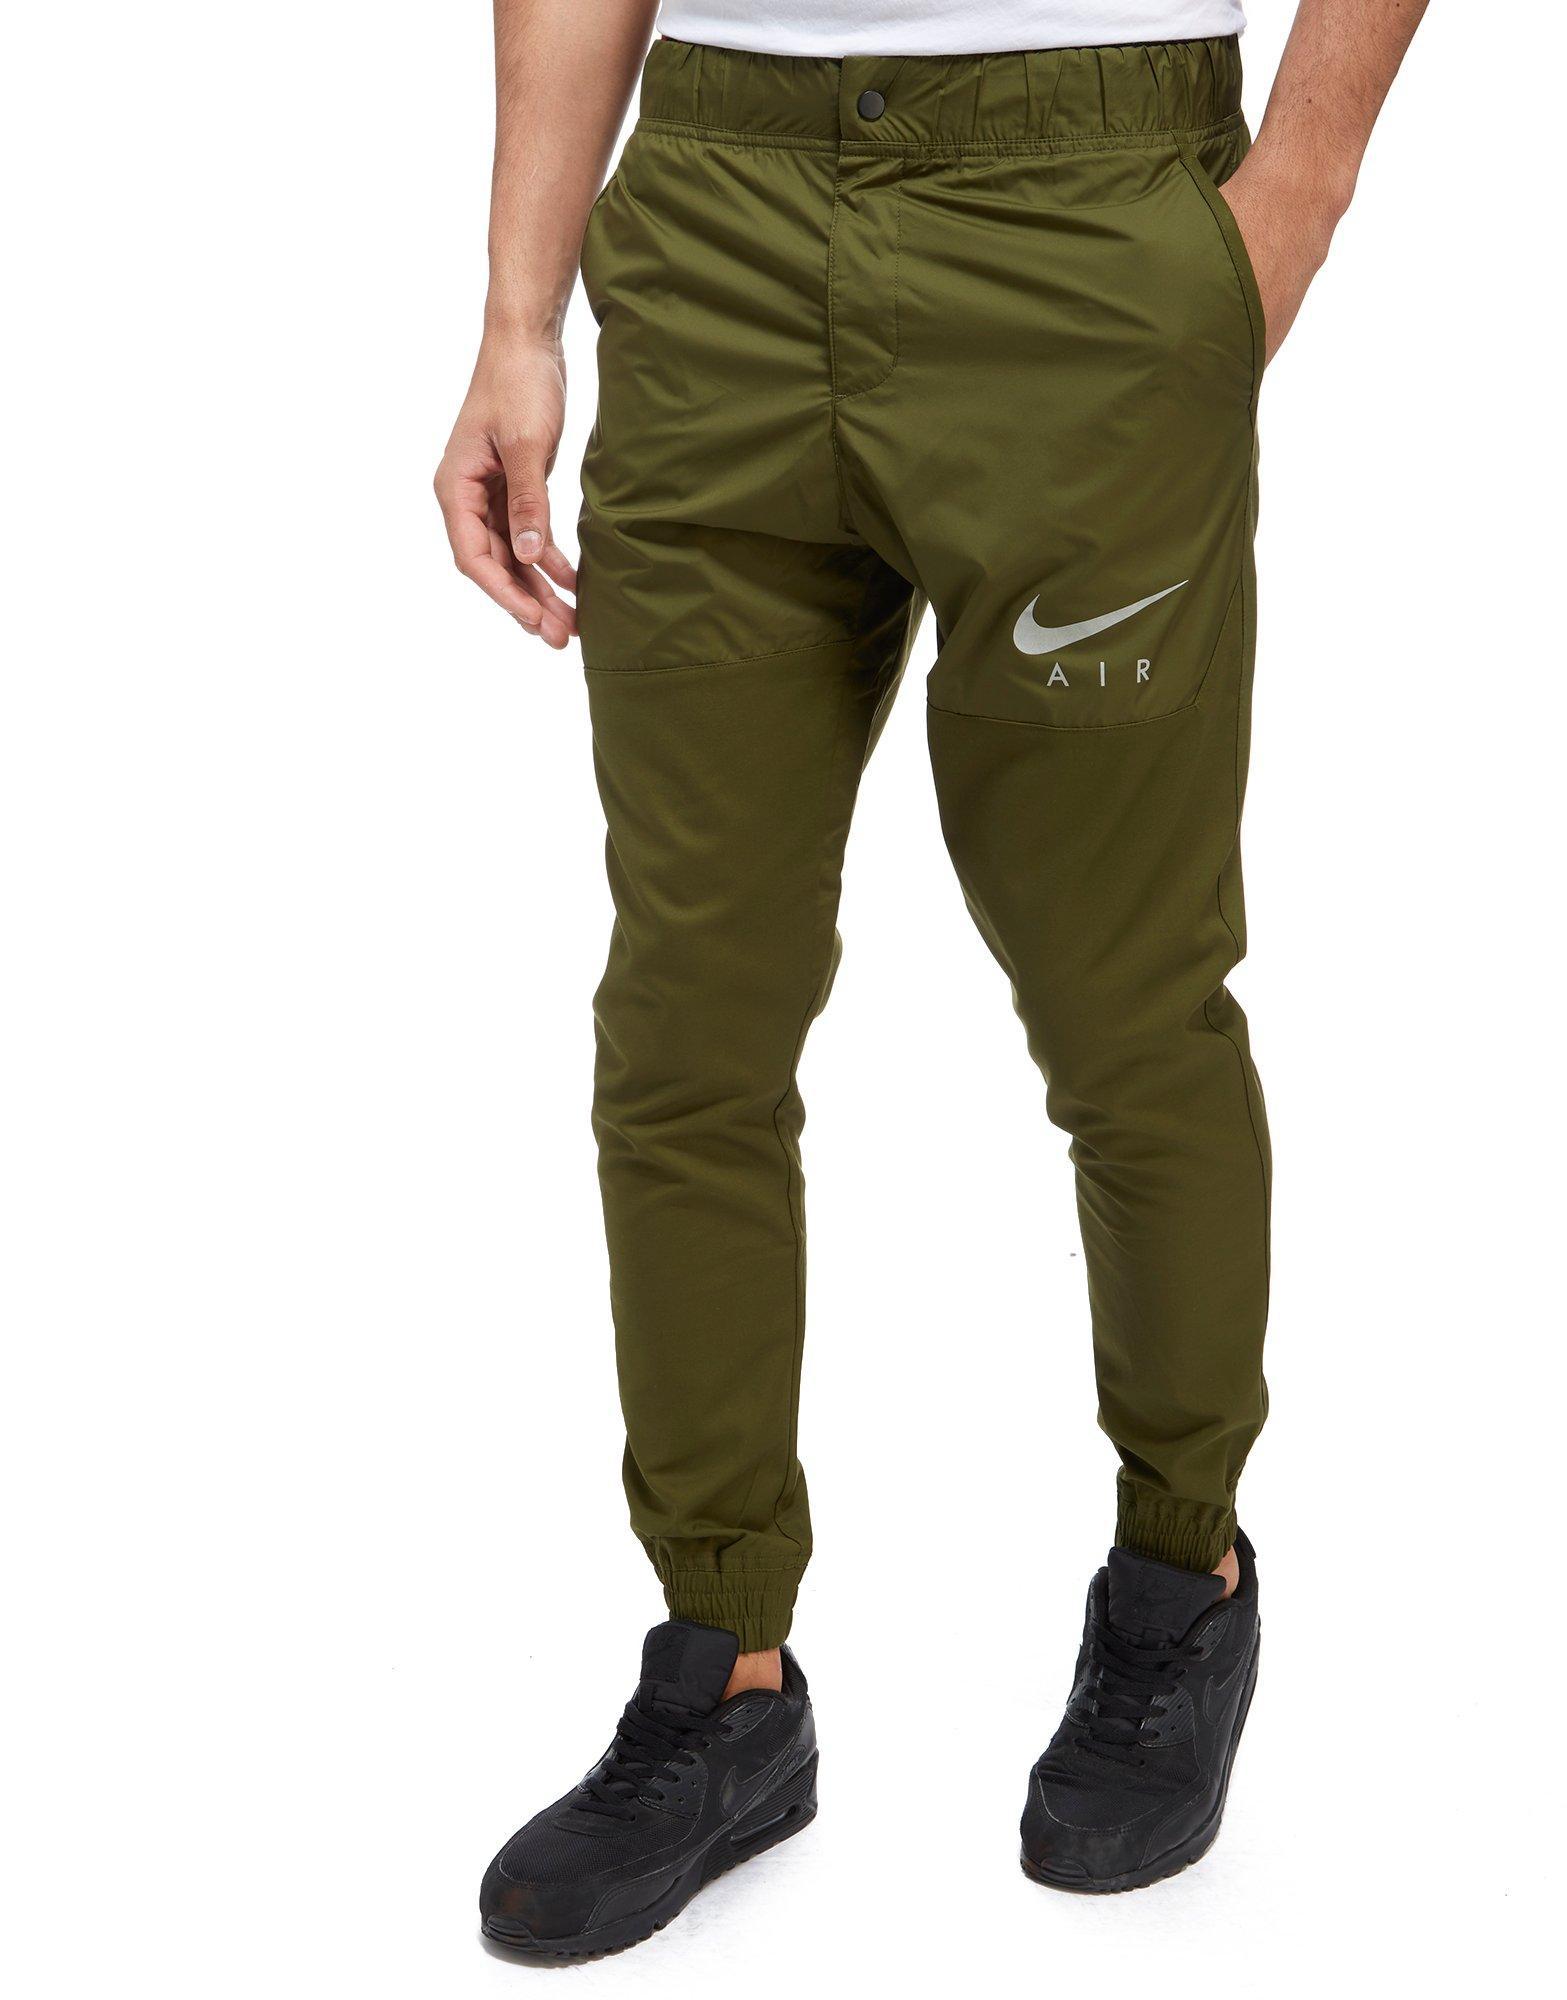 Nike Cotton Air Hybrid Jogging Pants in Light Green (Green) for Men - Lyst